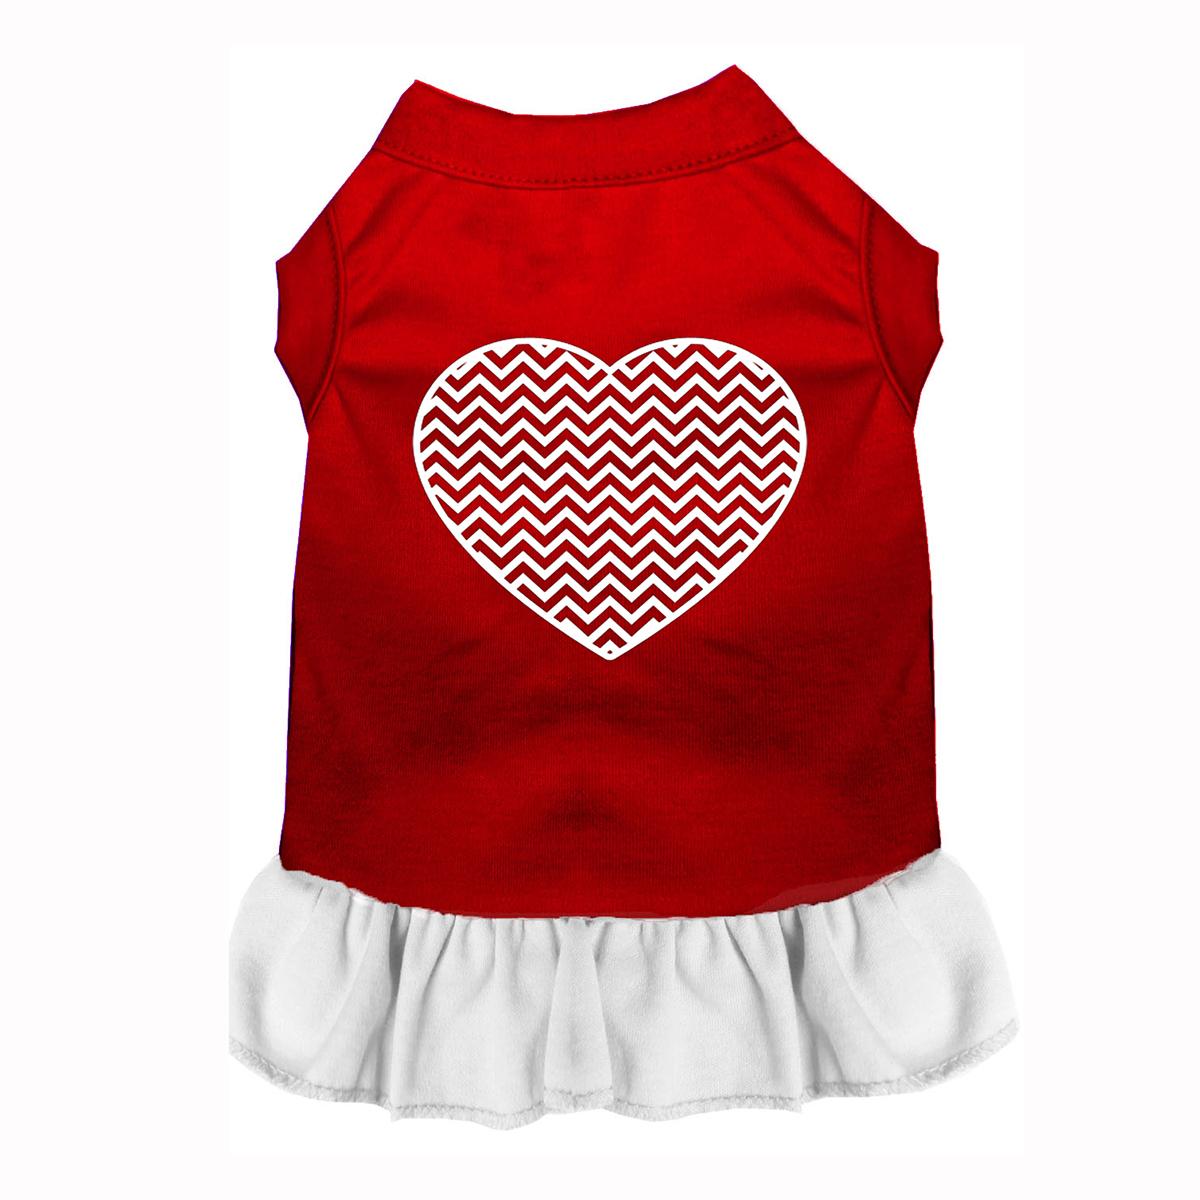 Chevron Heart Screenprint Dog Dress, Red & White Skirt - Extra Small